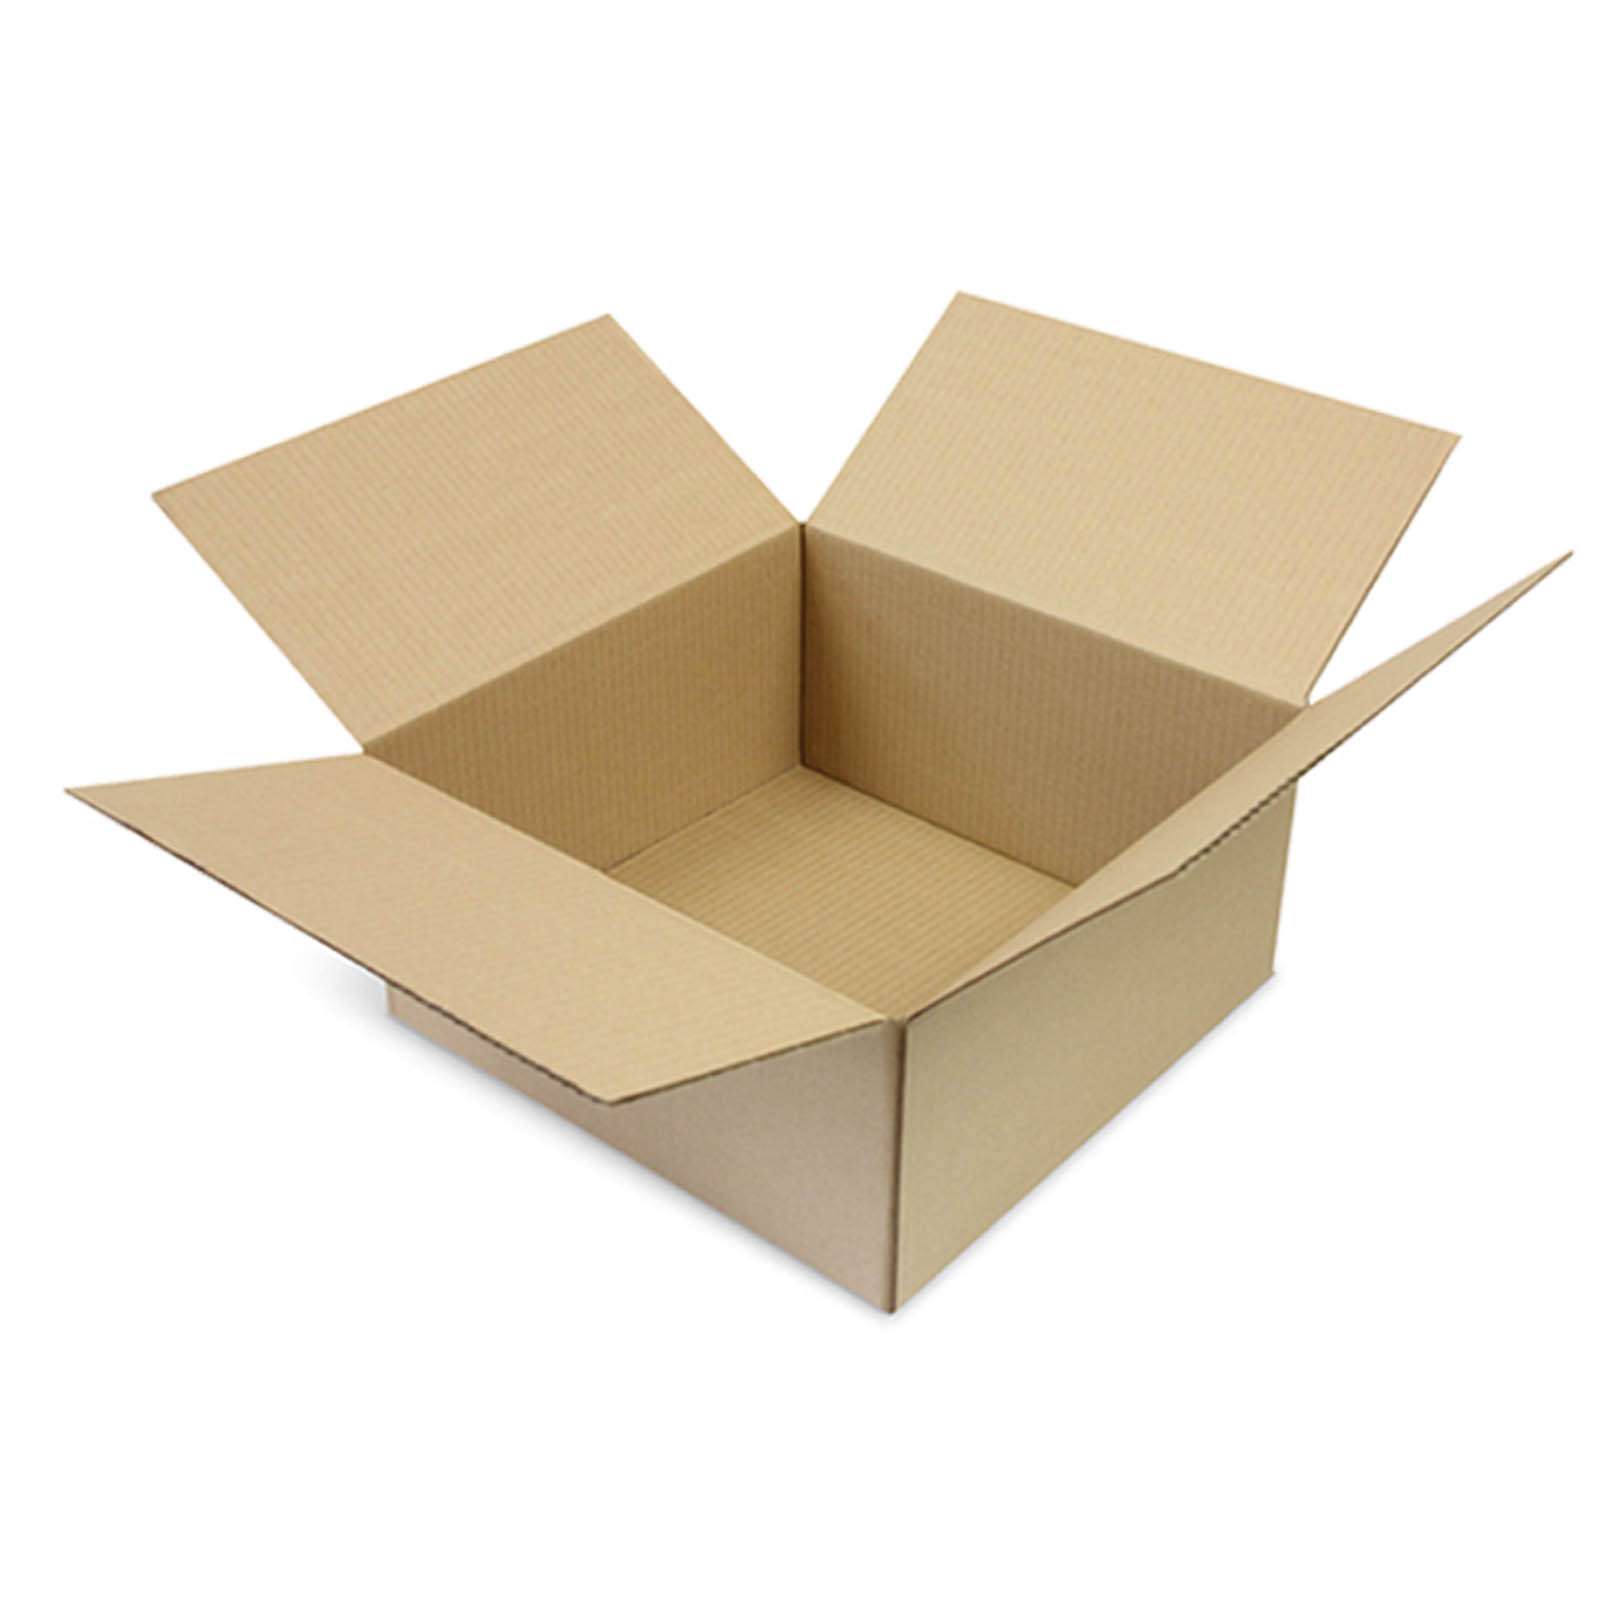 Cardboard box 300x300x150 mm - with digital print 4-sided